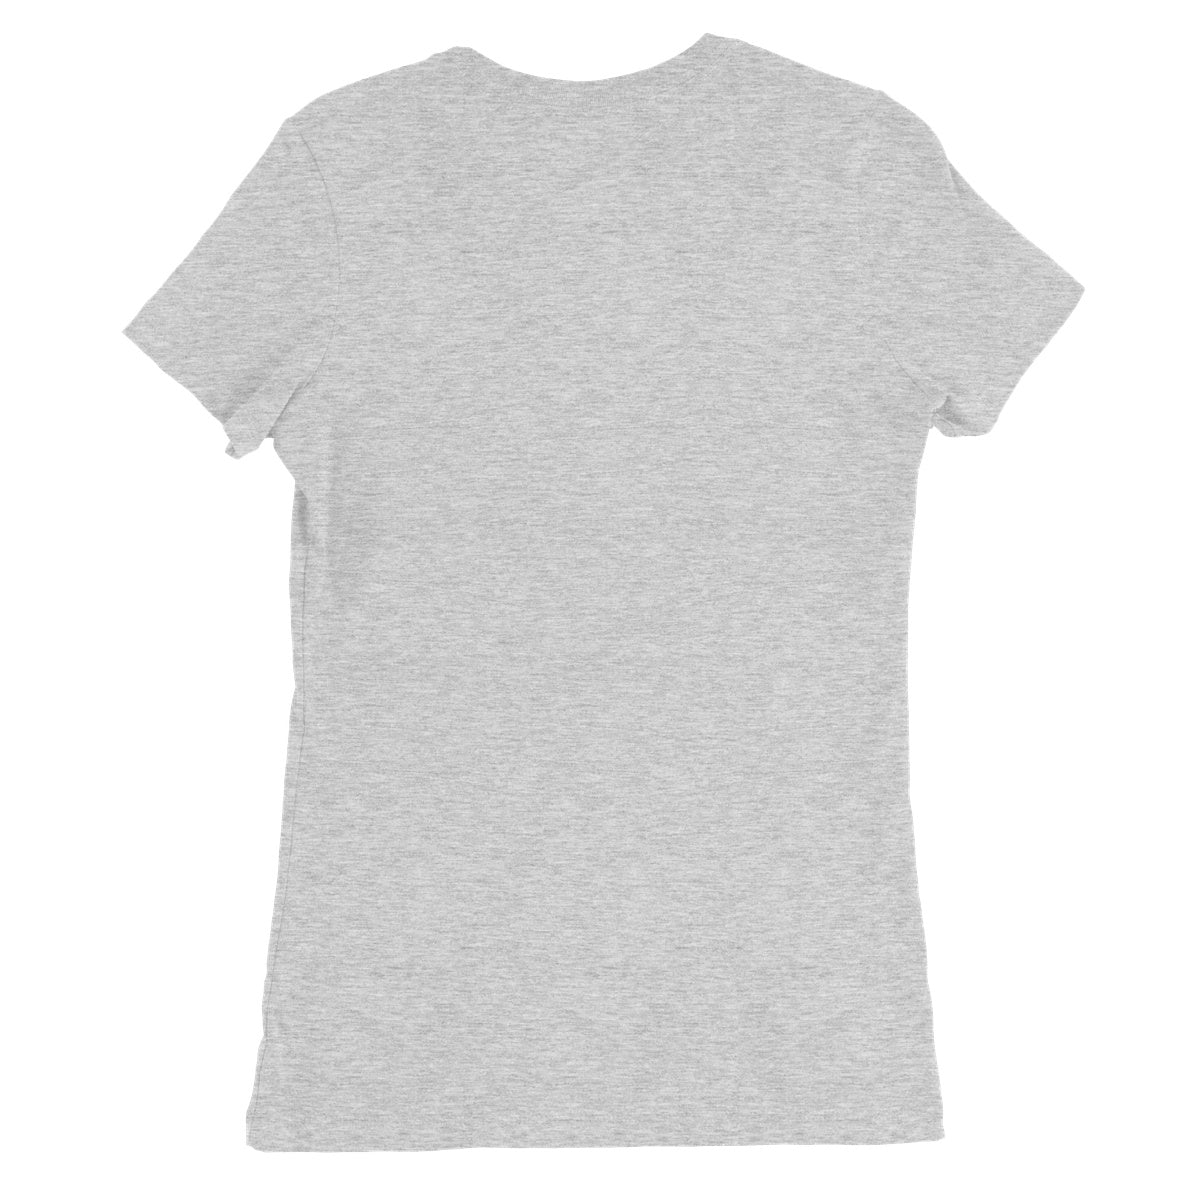 AQUA B&amp;W - 07 - Fang die Krabbe - Feines Jersey-T-Shirt für Frauen